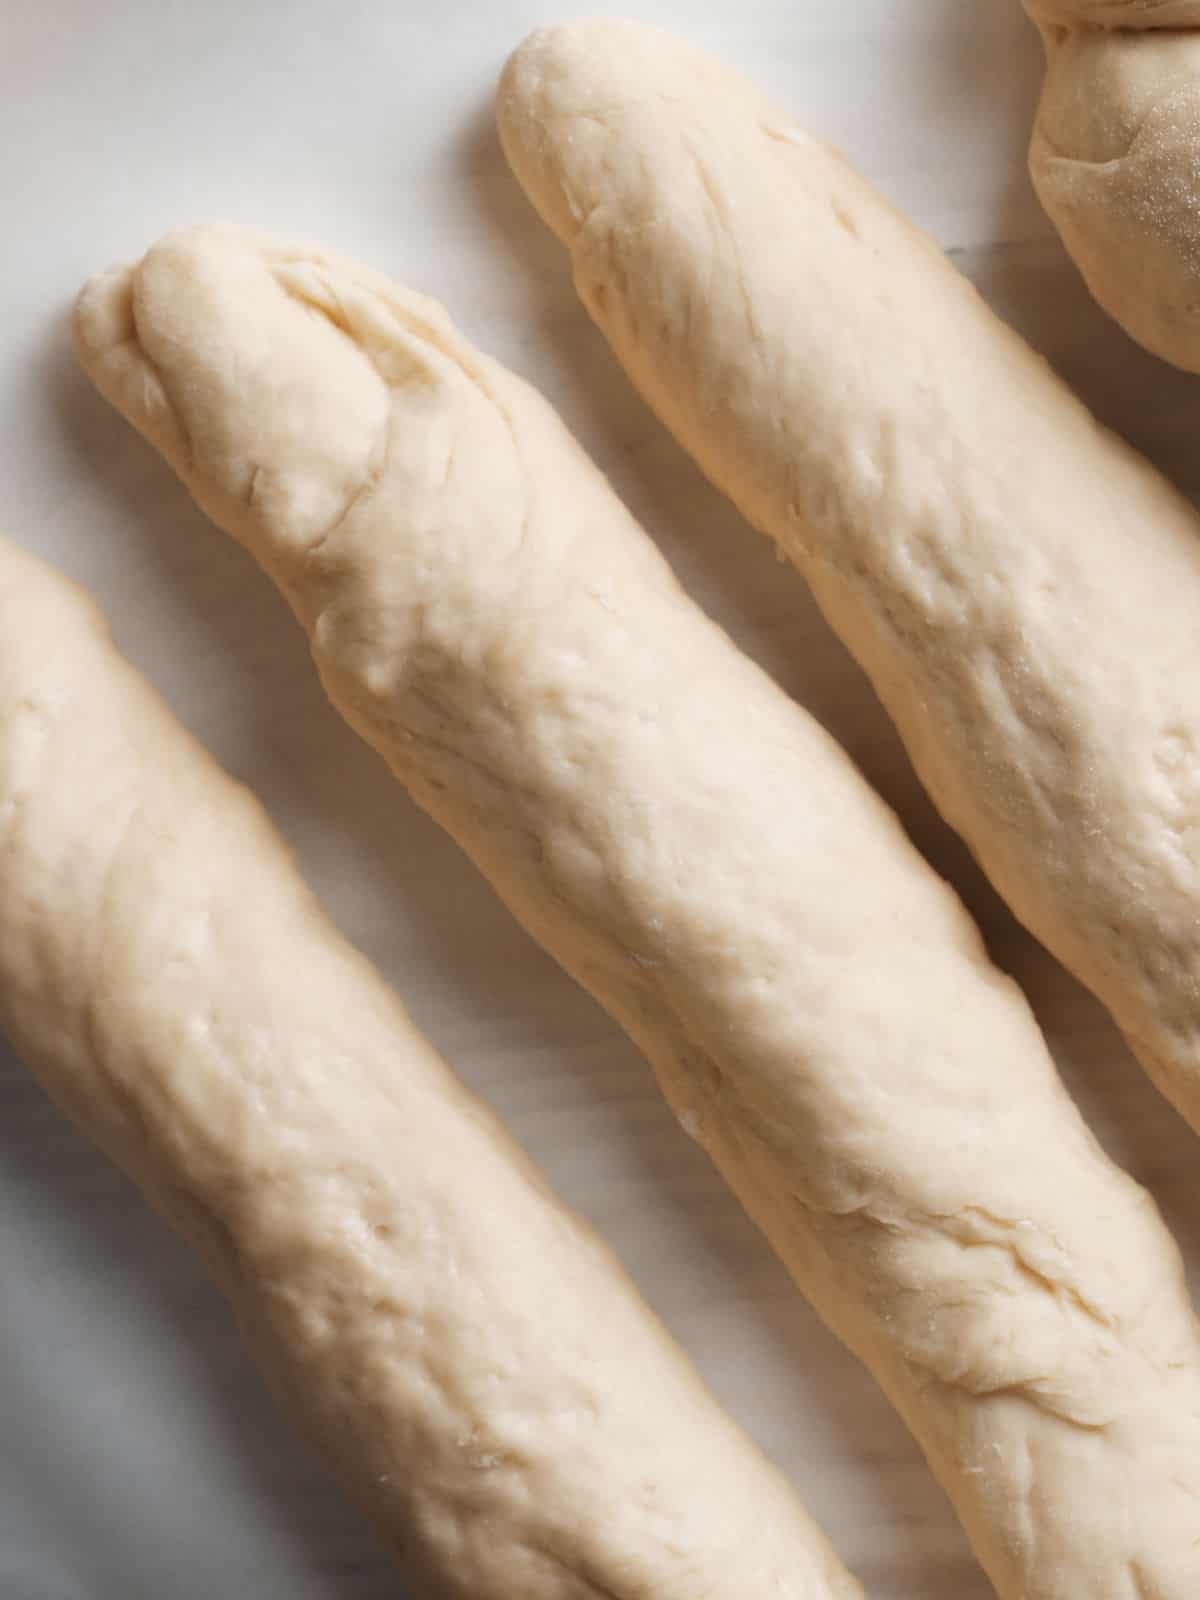 Dough divided into three strands.